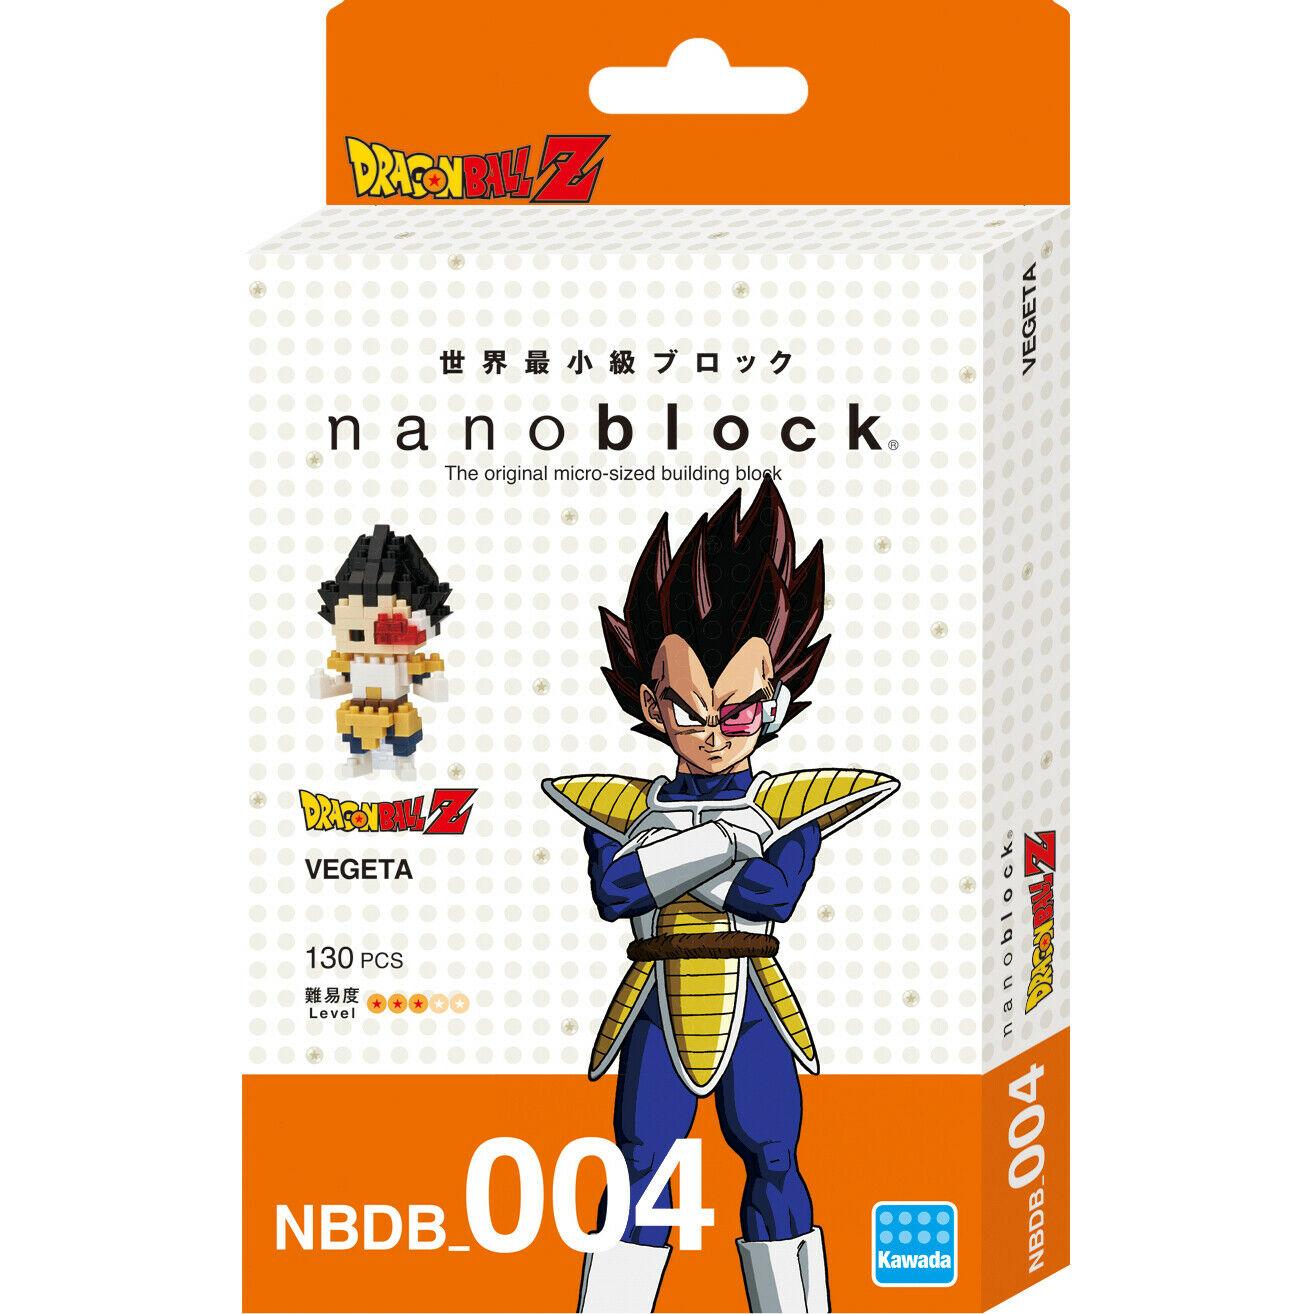 NanoBlock #004  Dragonball Vegeta 130pcs